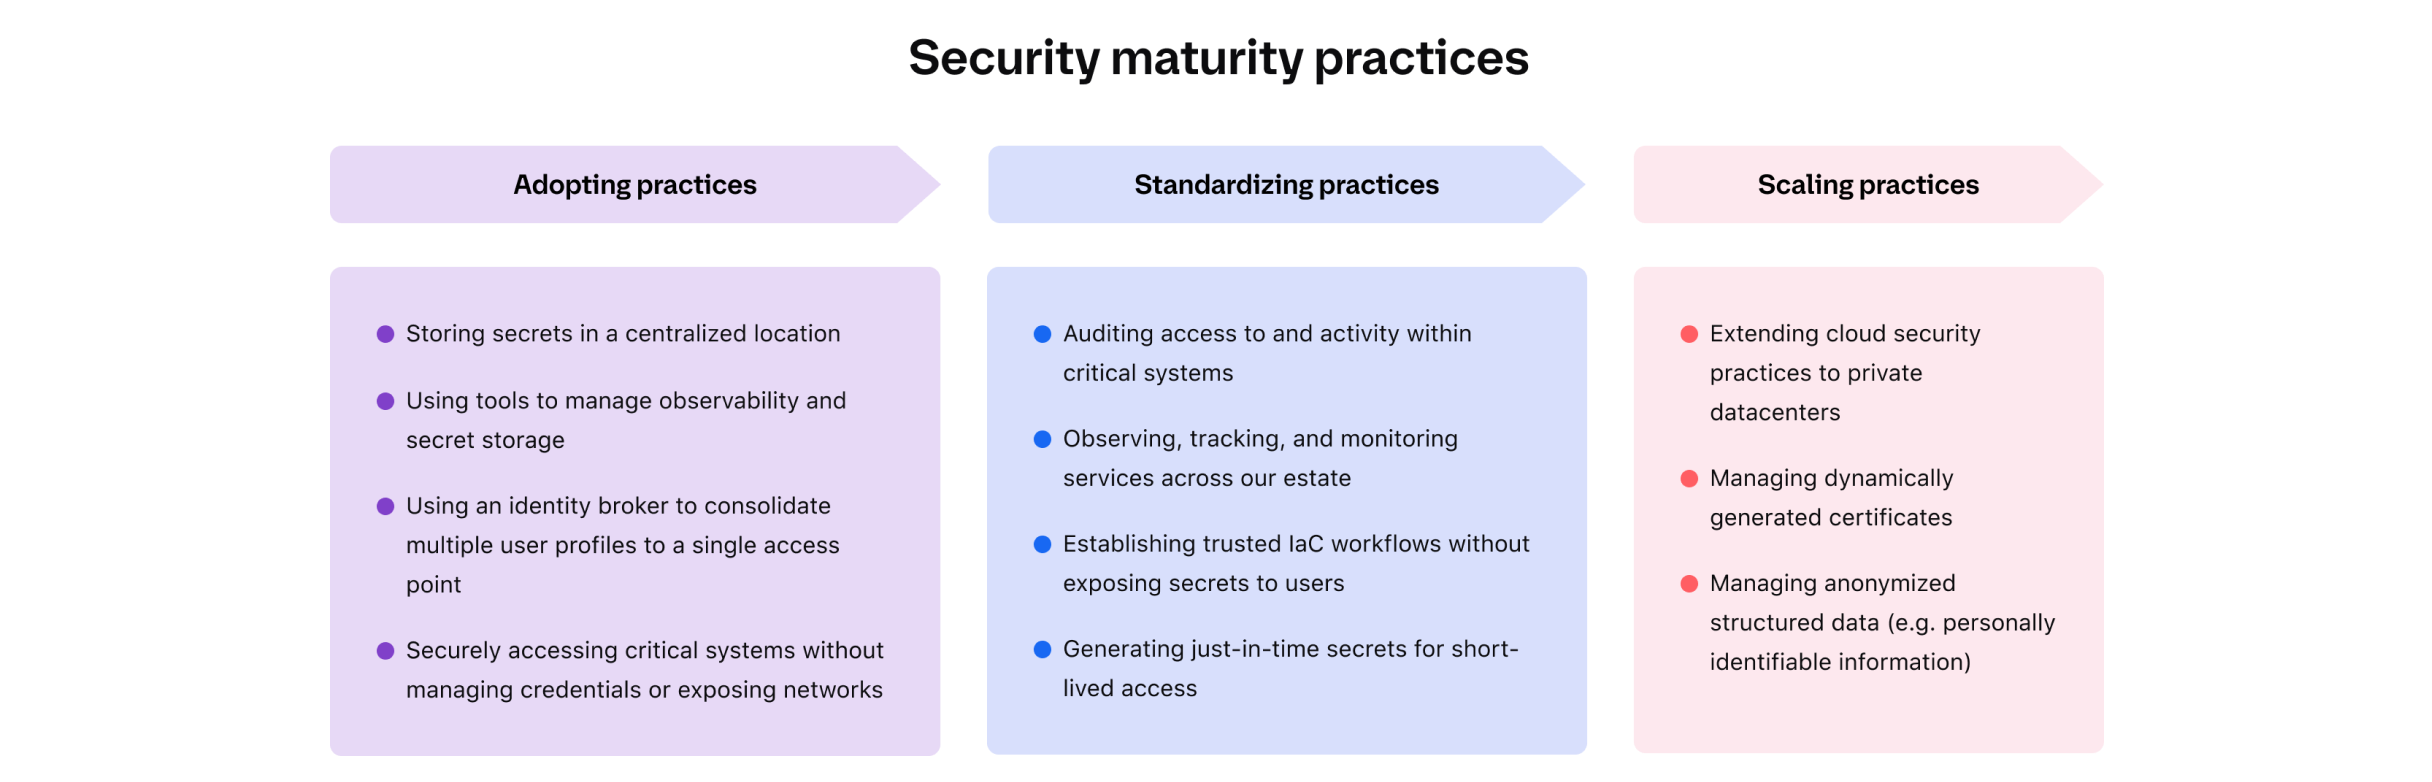 Security maturity practices